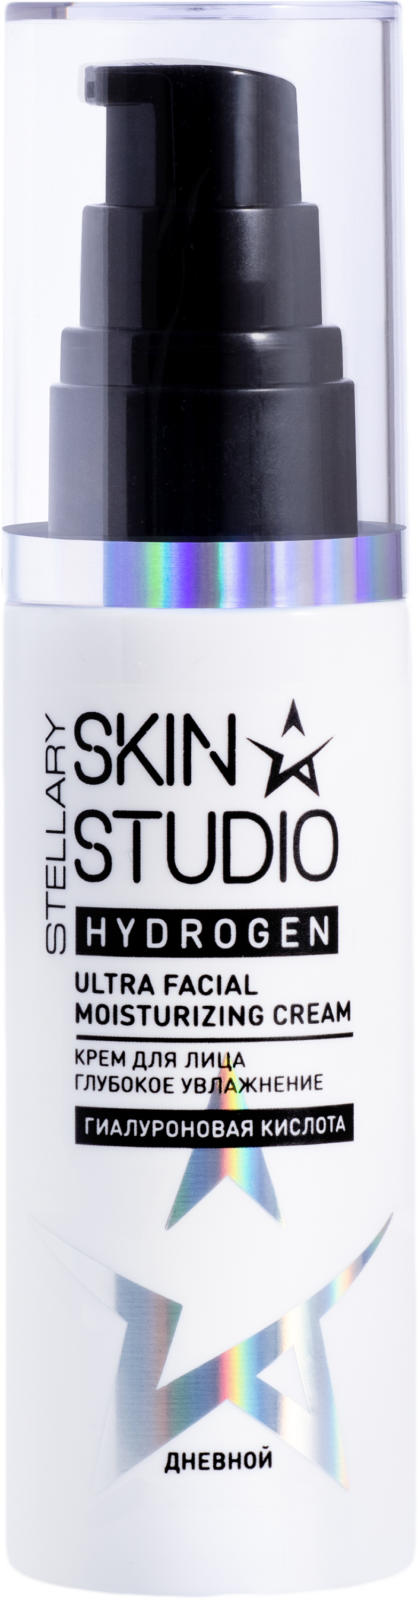 Stellary Skin Studio Hydrogen Крем для лица дневной увлажняющий, крем для лица, 50 мл, 1 шт.